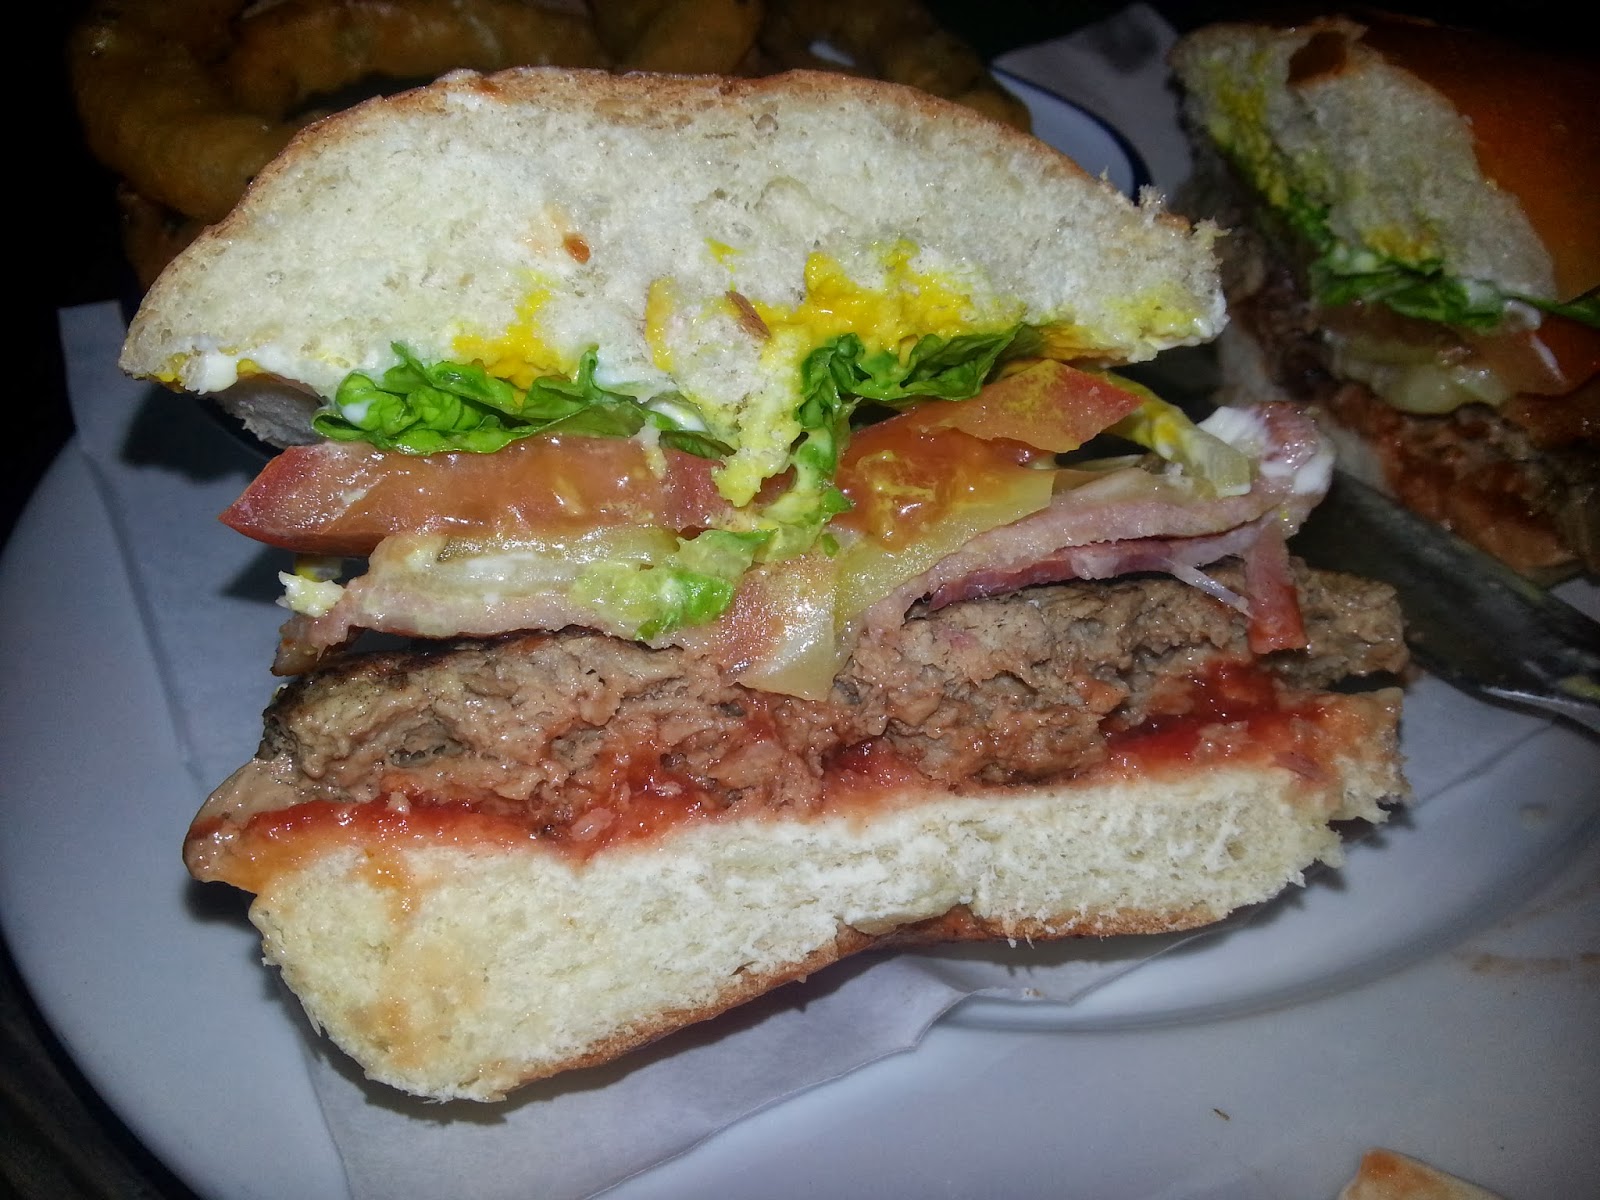 Cut-through - burger at The Ring, Southwark